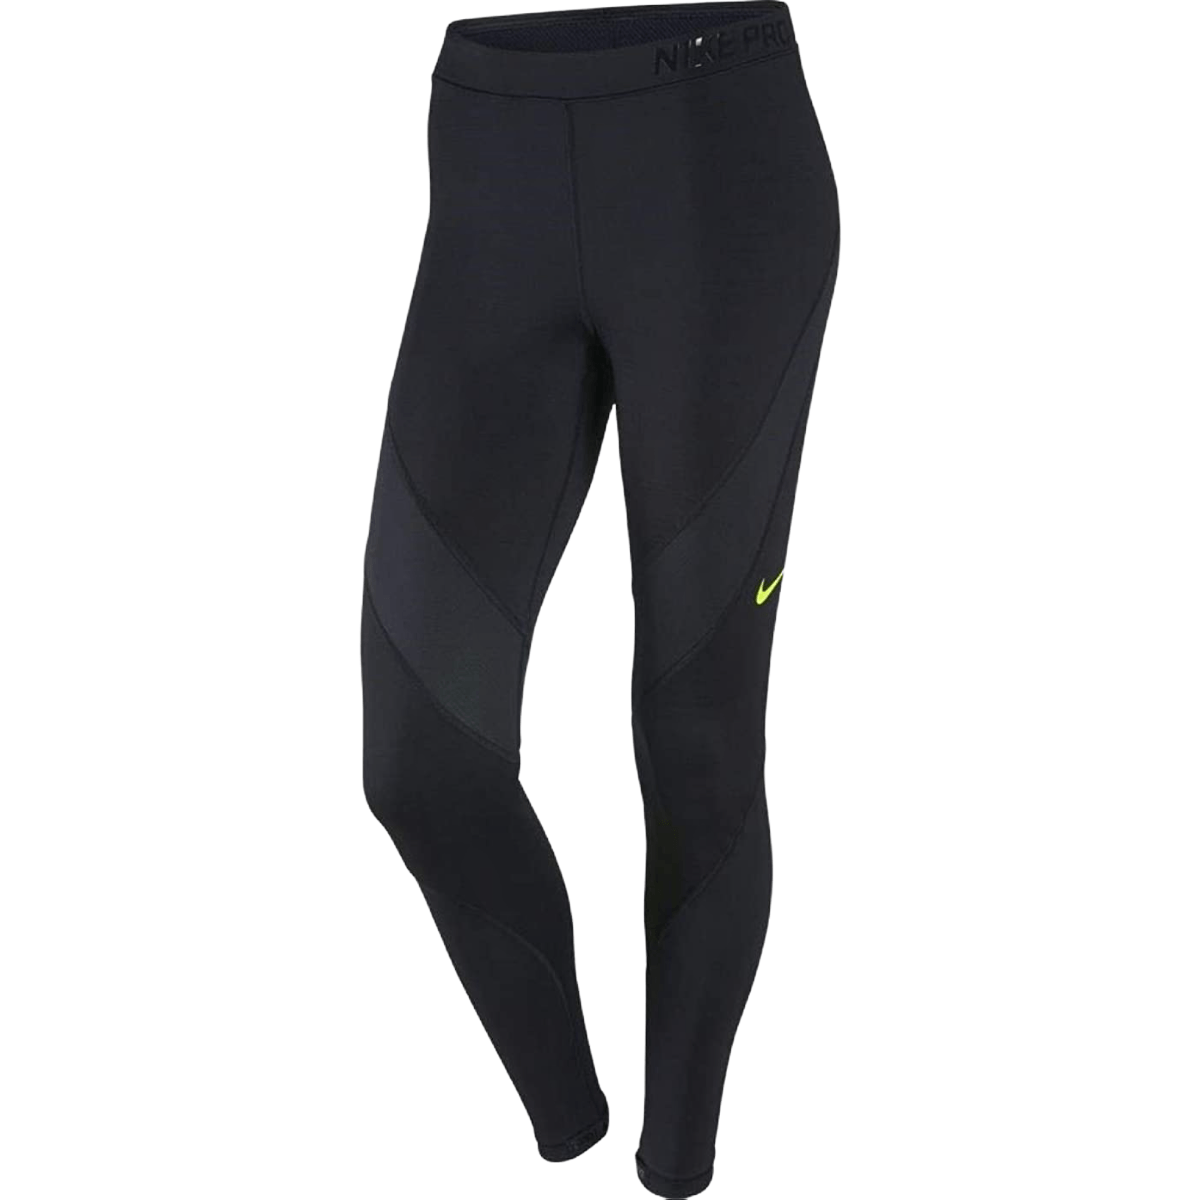 Nike Hyperwarm Fleece-lined Legging - Women's - Als.com